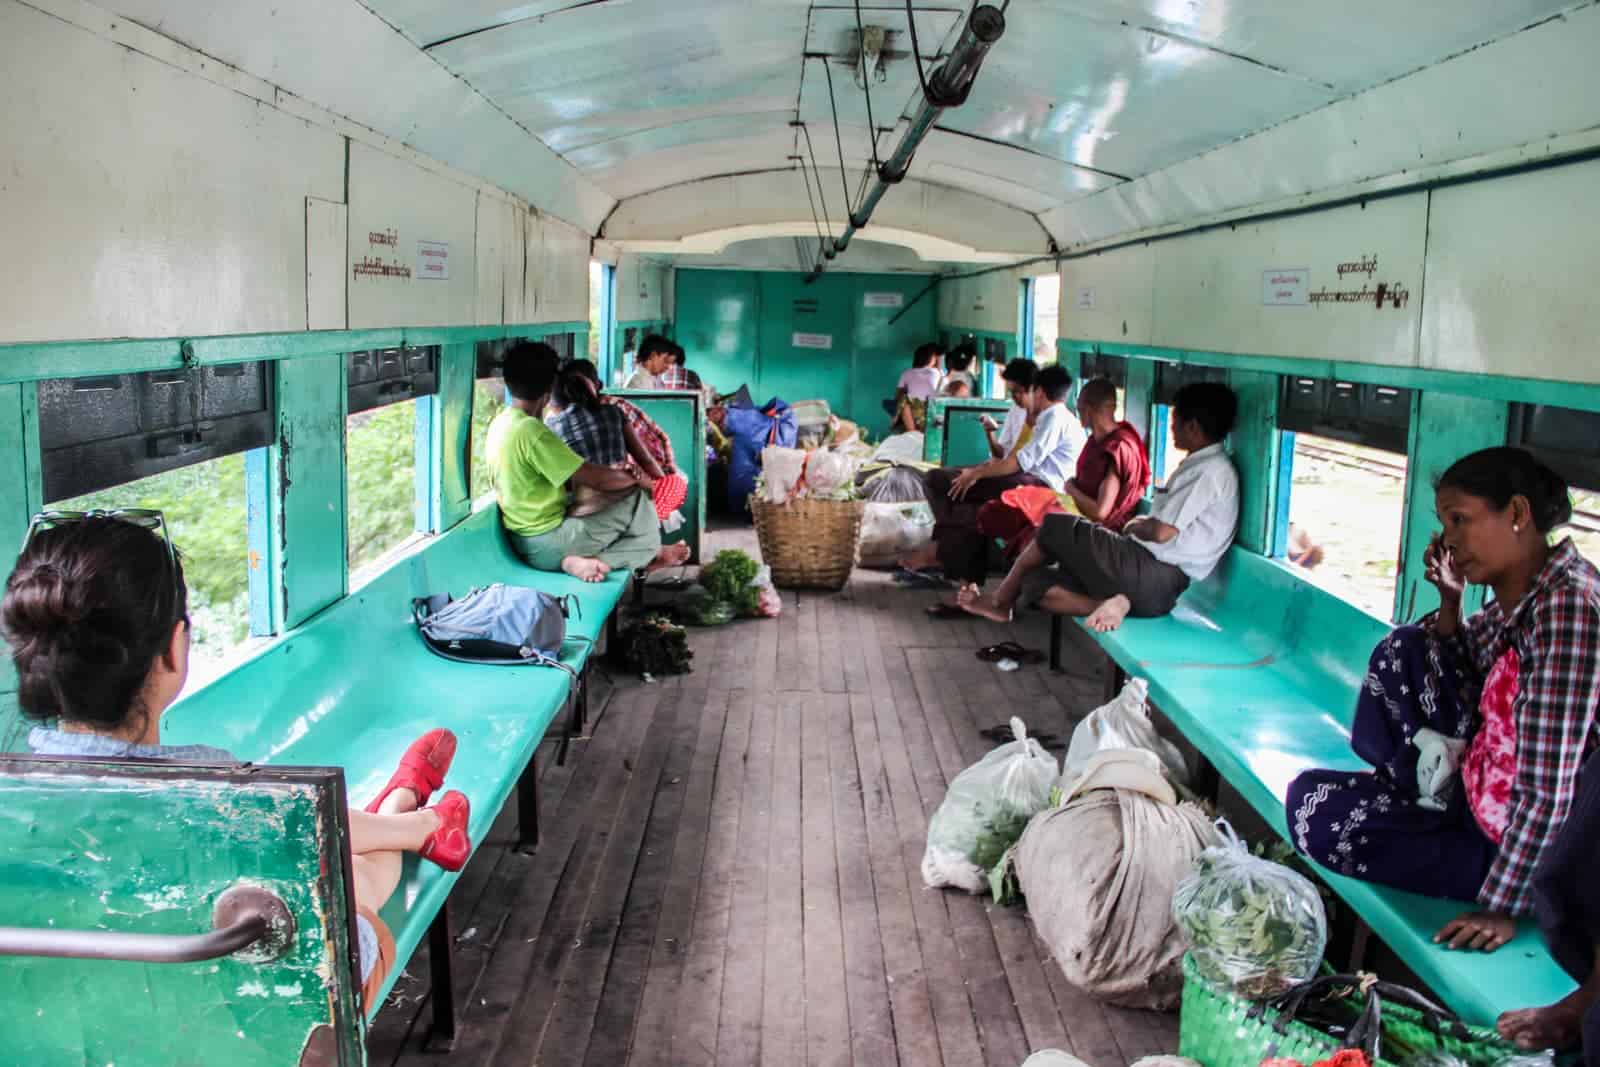 Riding on the Yangon Circular Railway in Myanmar